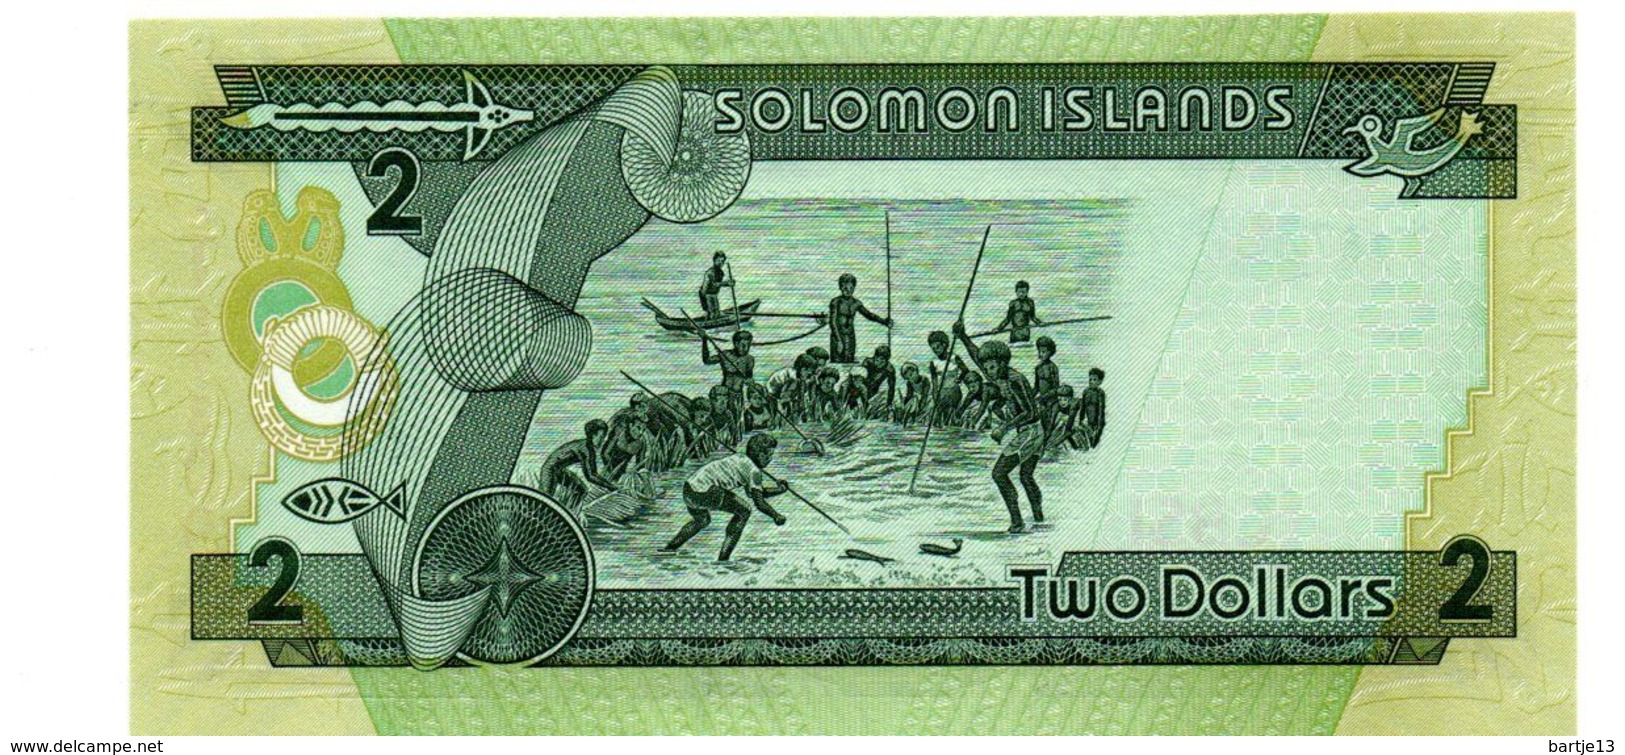 SOLOMON ISLANDS 2 DOLLARS PICK 18 UNCIRCULATED POLYMEER - Salomons